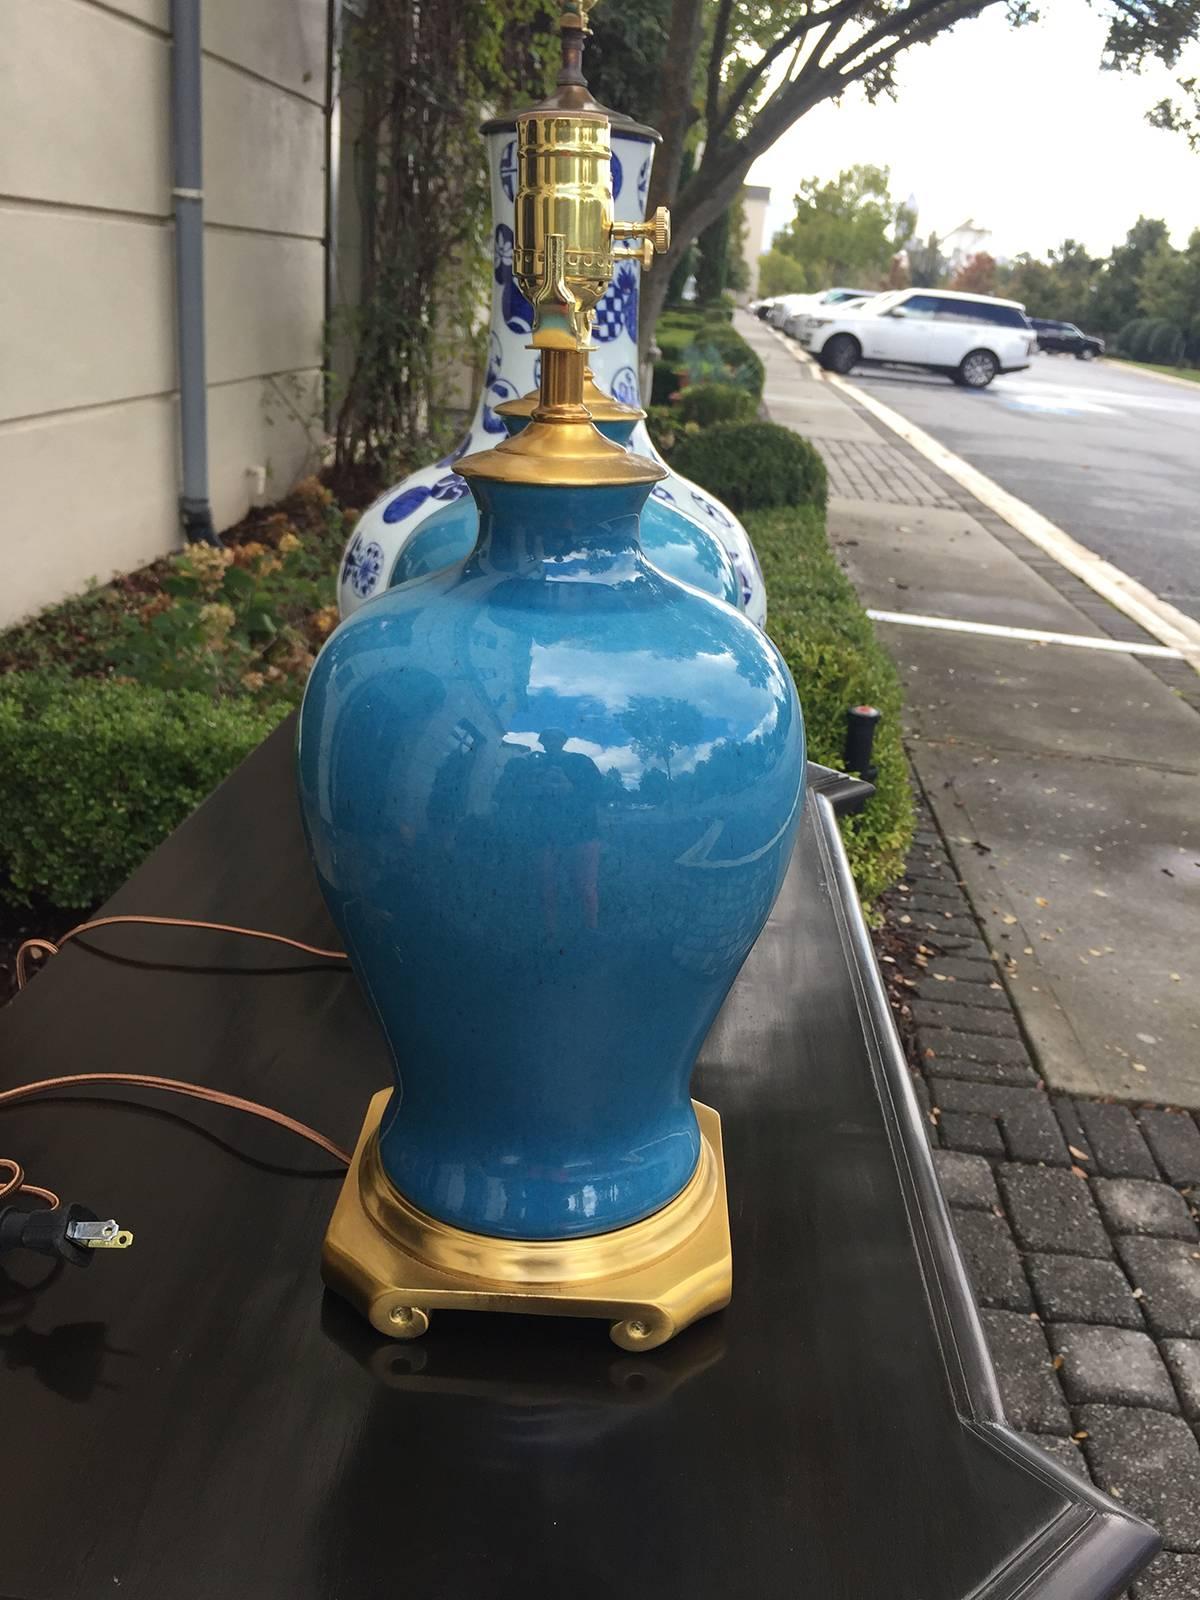 Single mid-20th century glazed blue porcelain lamp, brass base
New wiring.